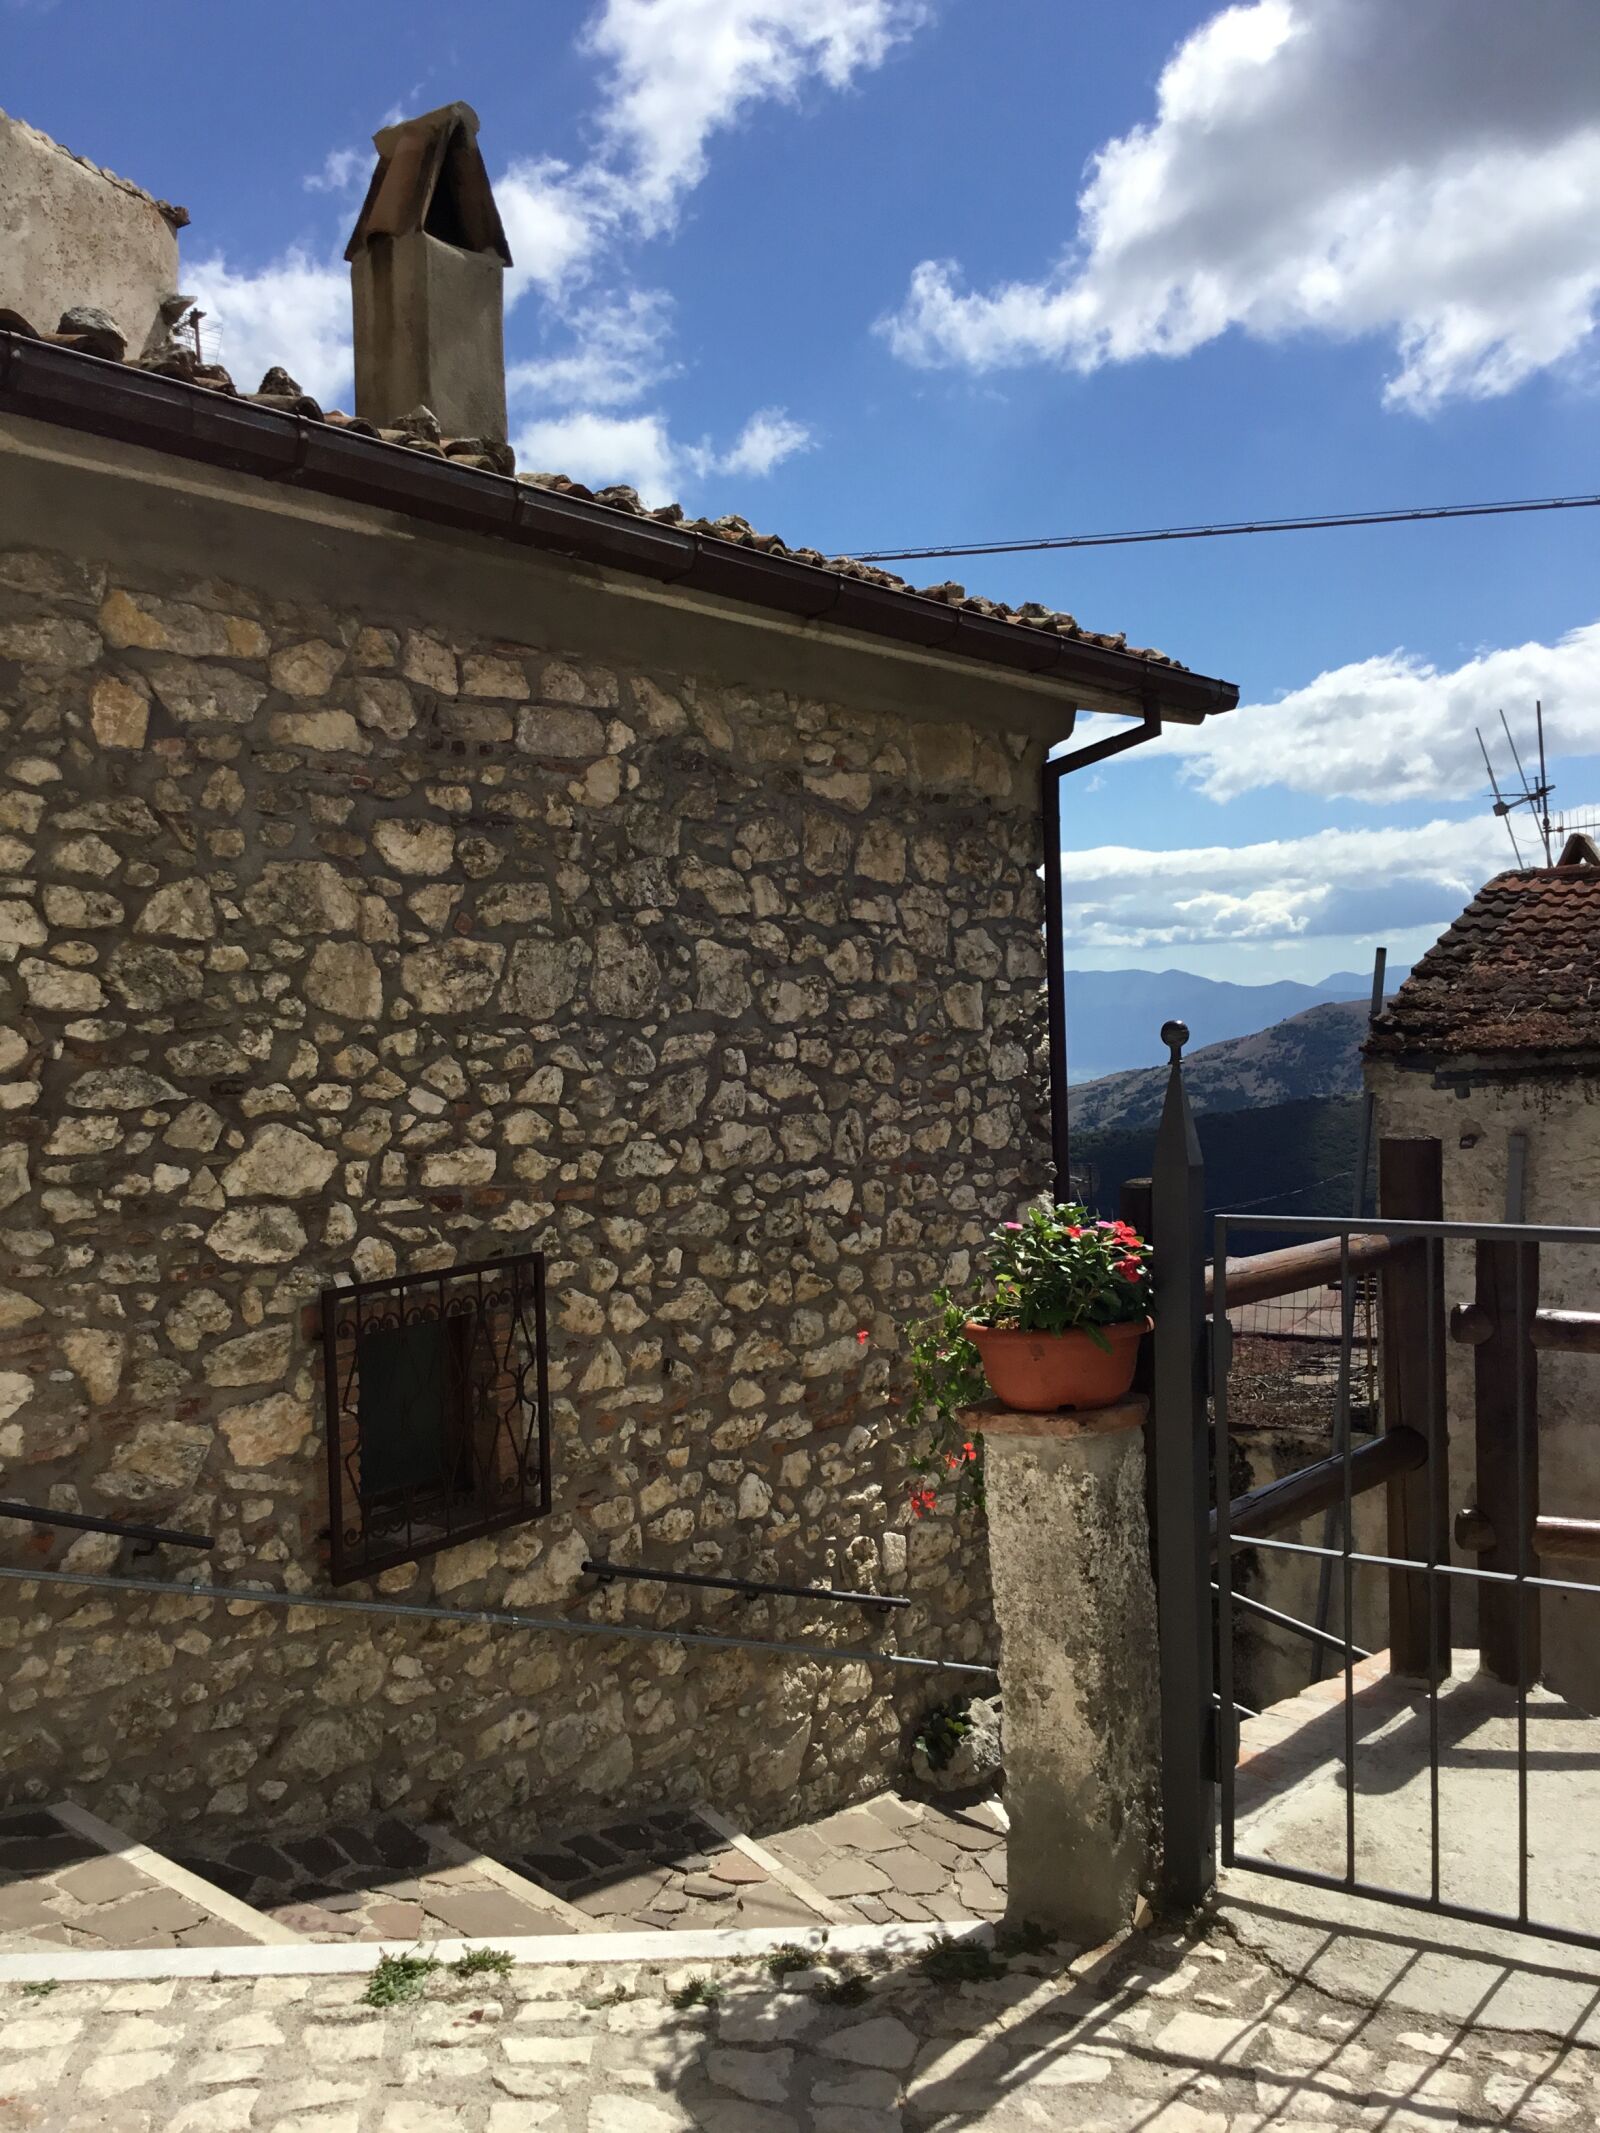 Apple iPad Pro + iPad Pro back camera 3.3mm f/2.4 sample photo. Villages, italians, historical photography